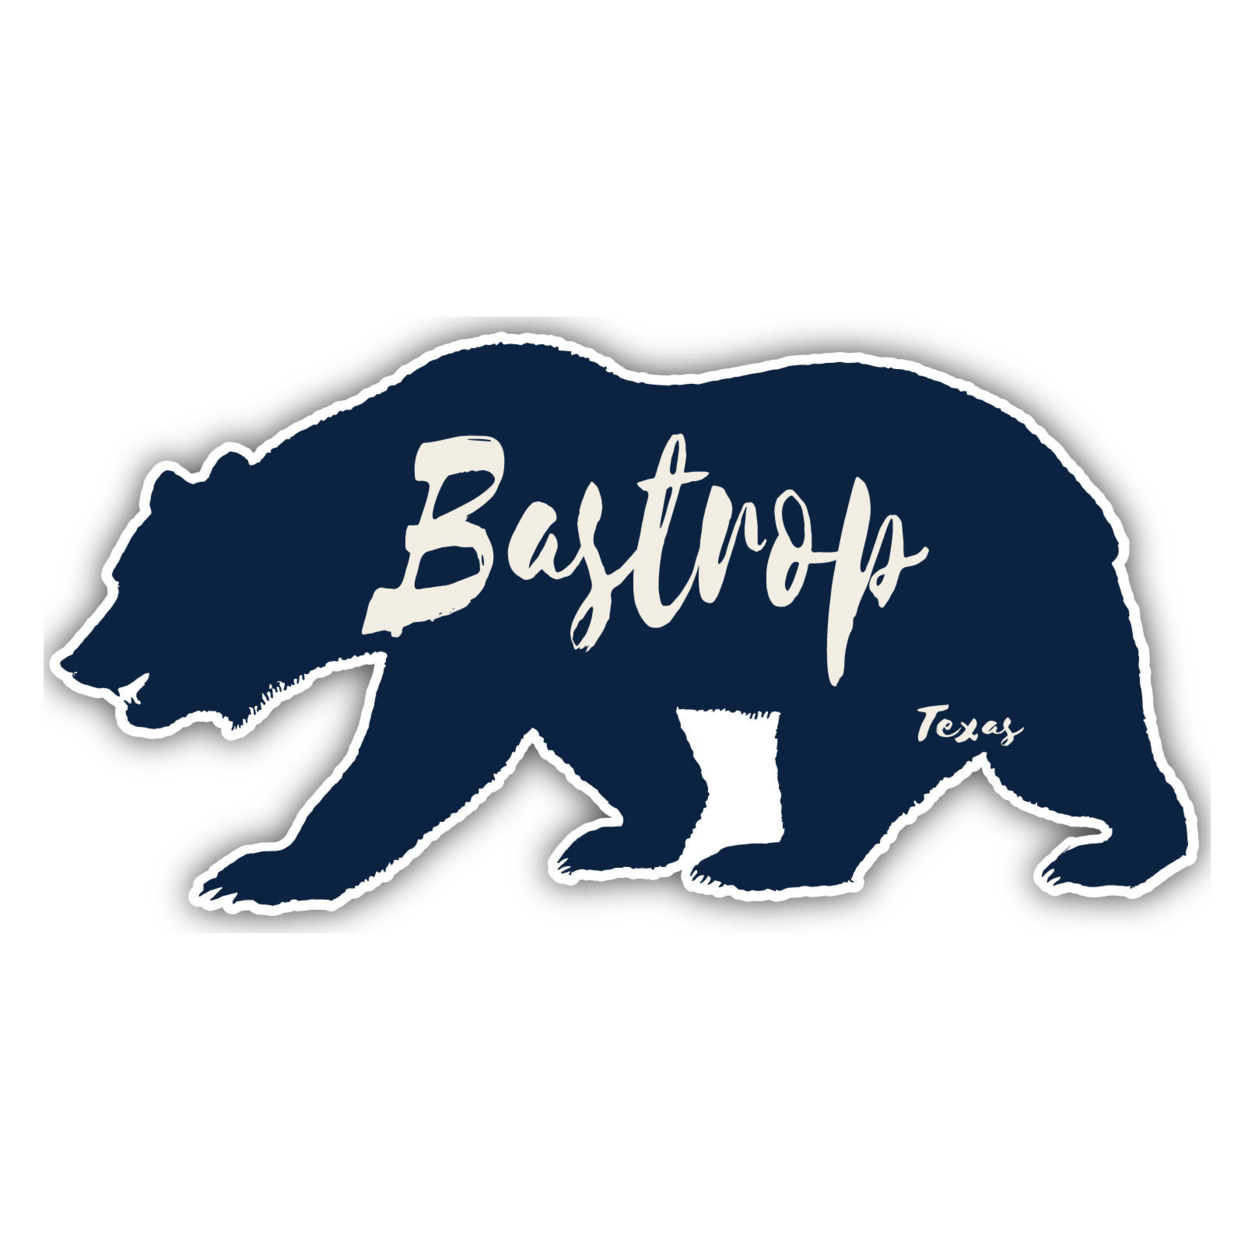 Bastrop Texas Souvenir Decorative Stickers (Choose Theme And Size) - Single Unit, 4-Inch, Bear